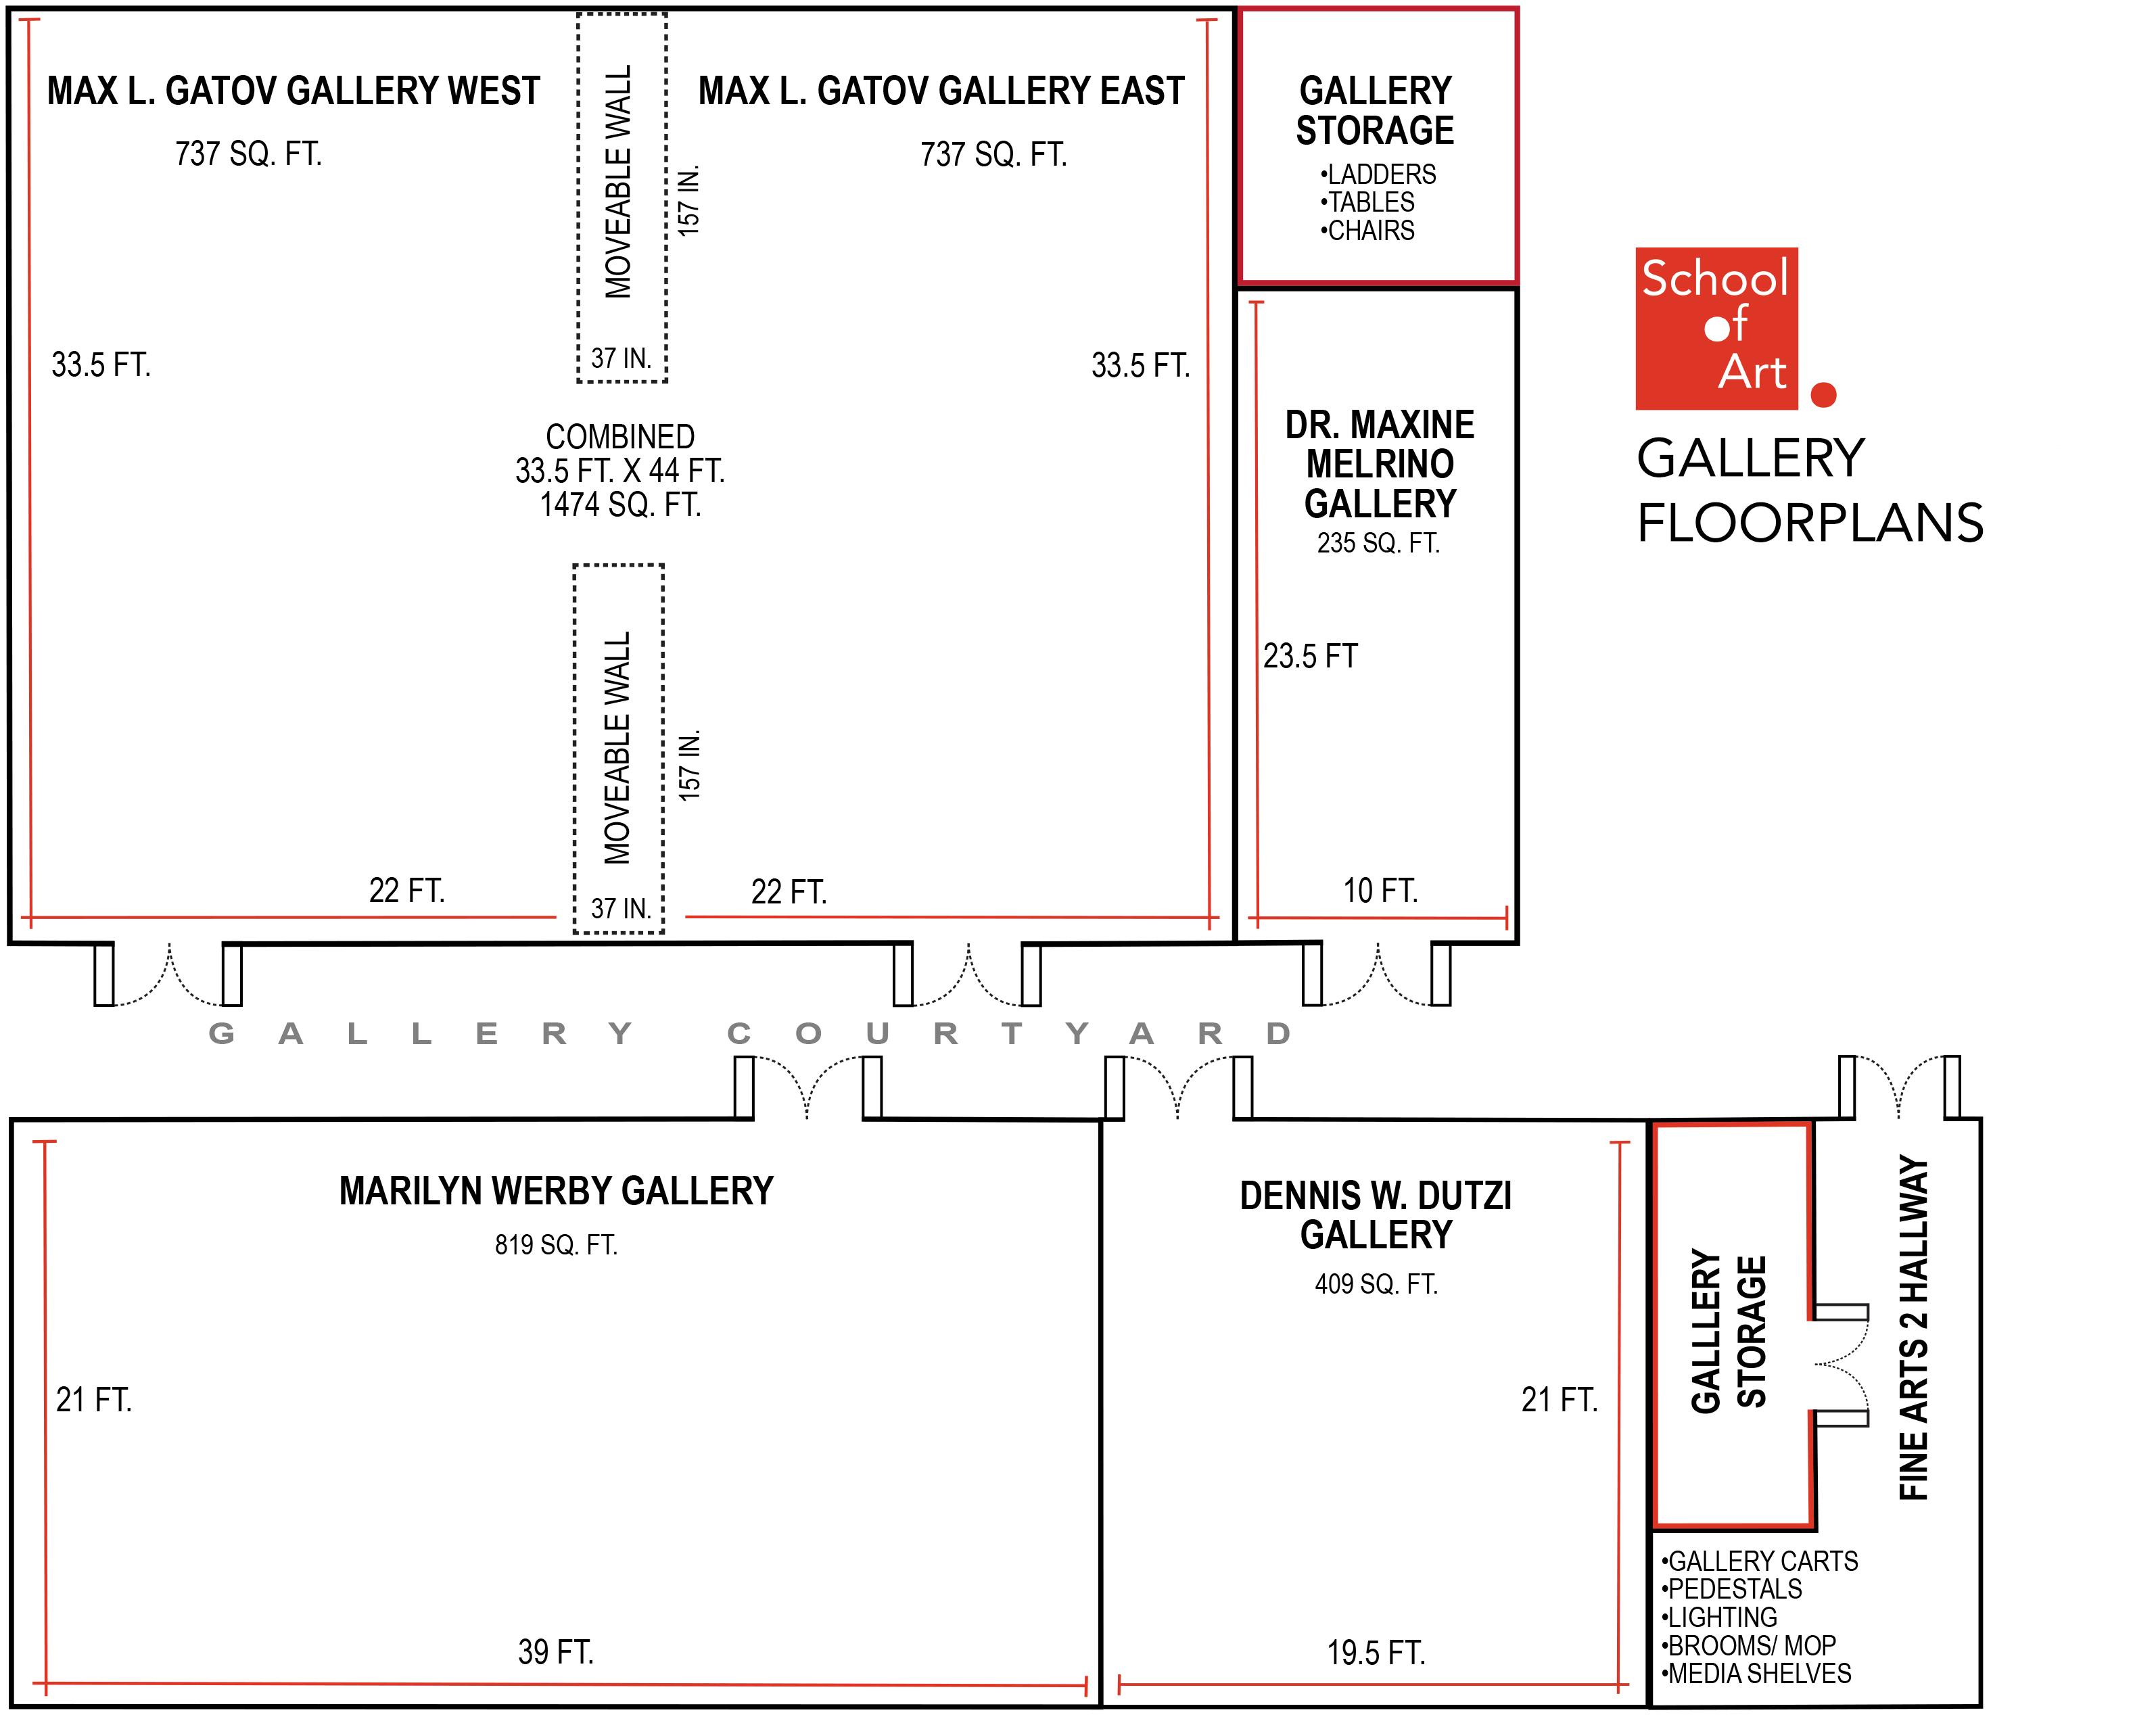 Student Gallery Floorplans